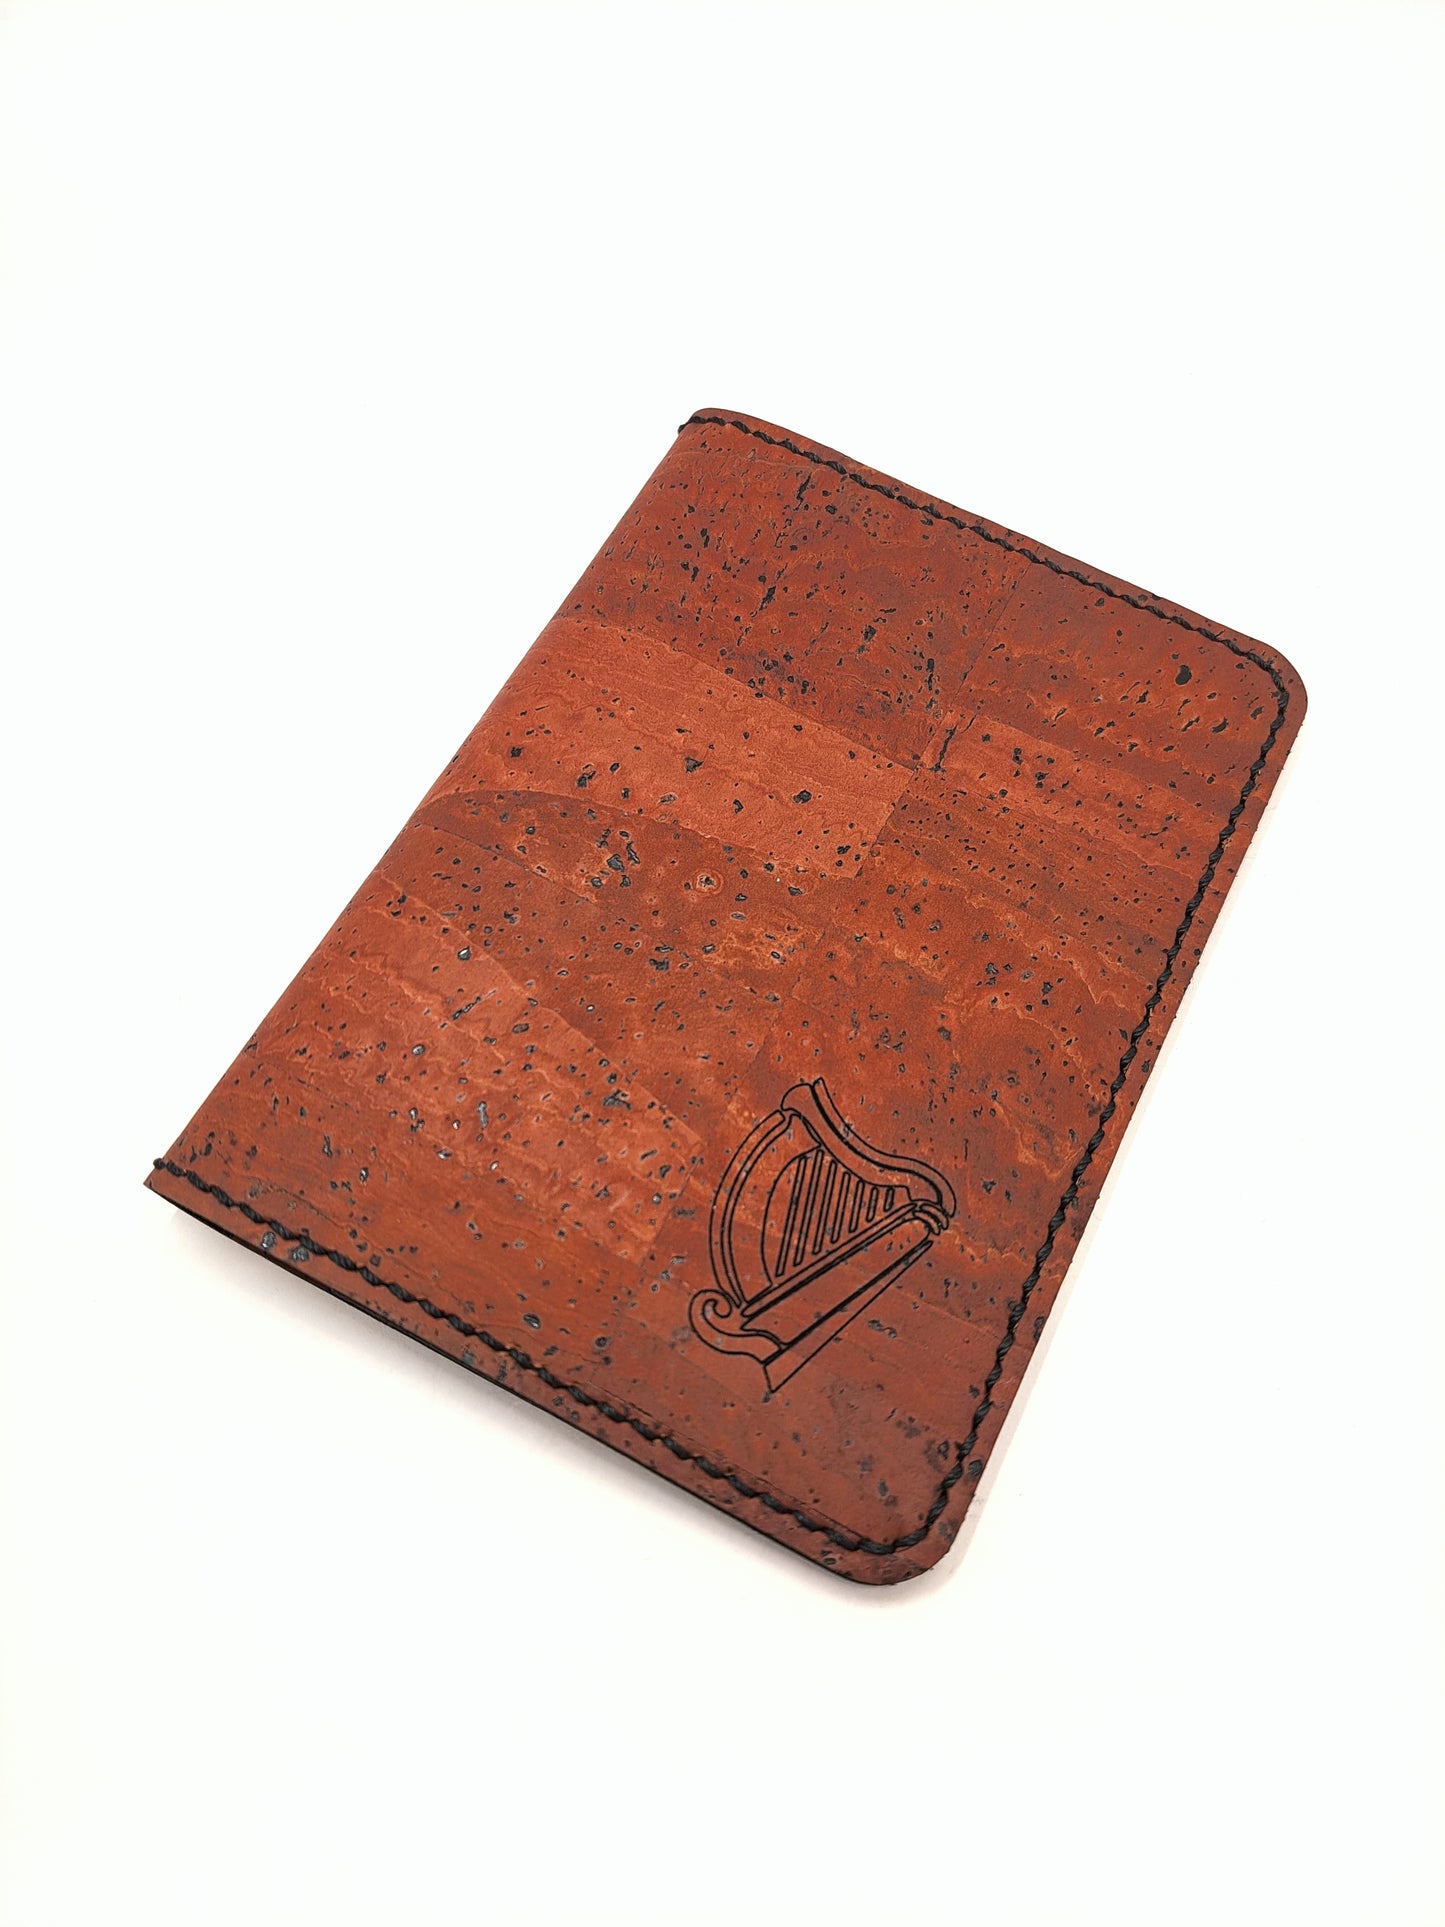 Cork Passport Holder, Harp Engraving